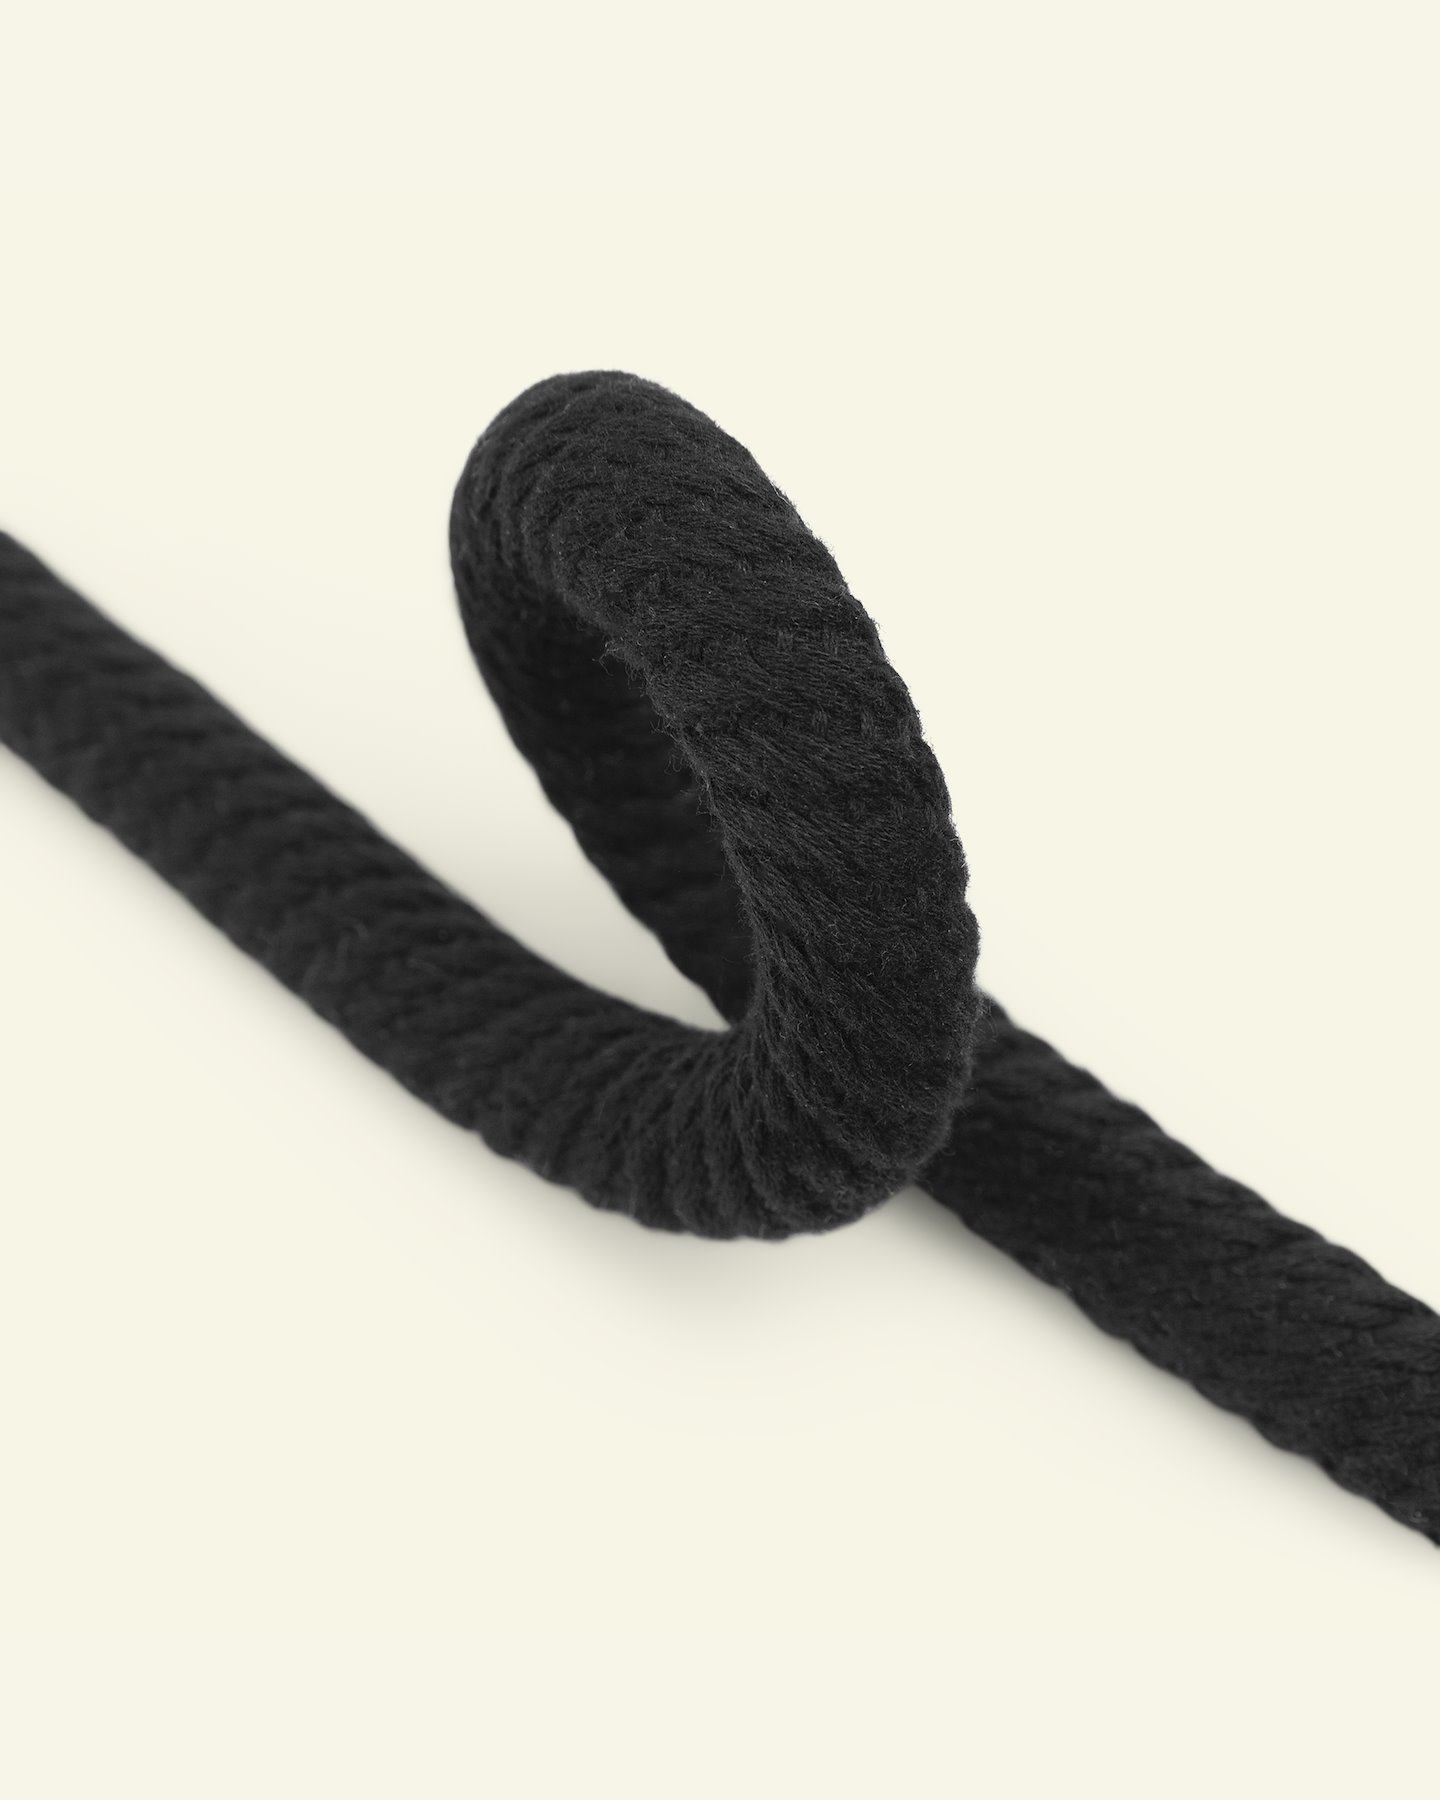 String/soft rope 15mm black 2m 74800_pack.png